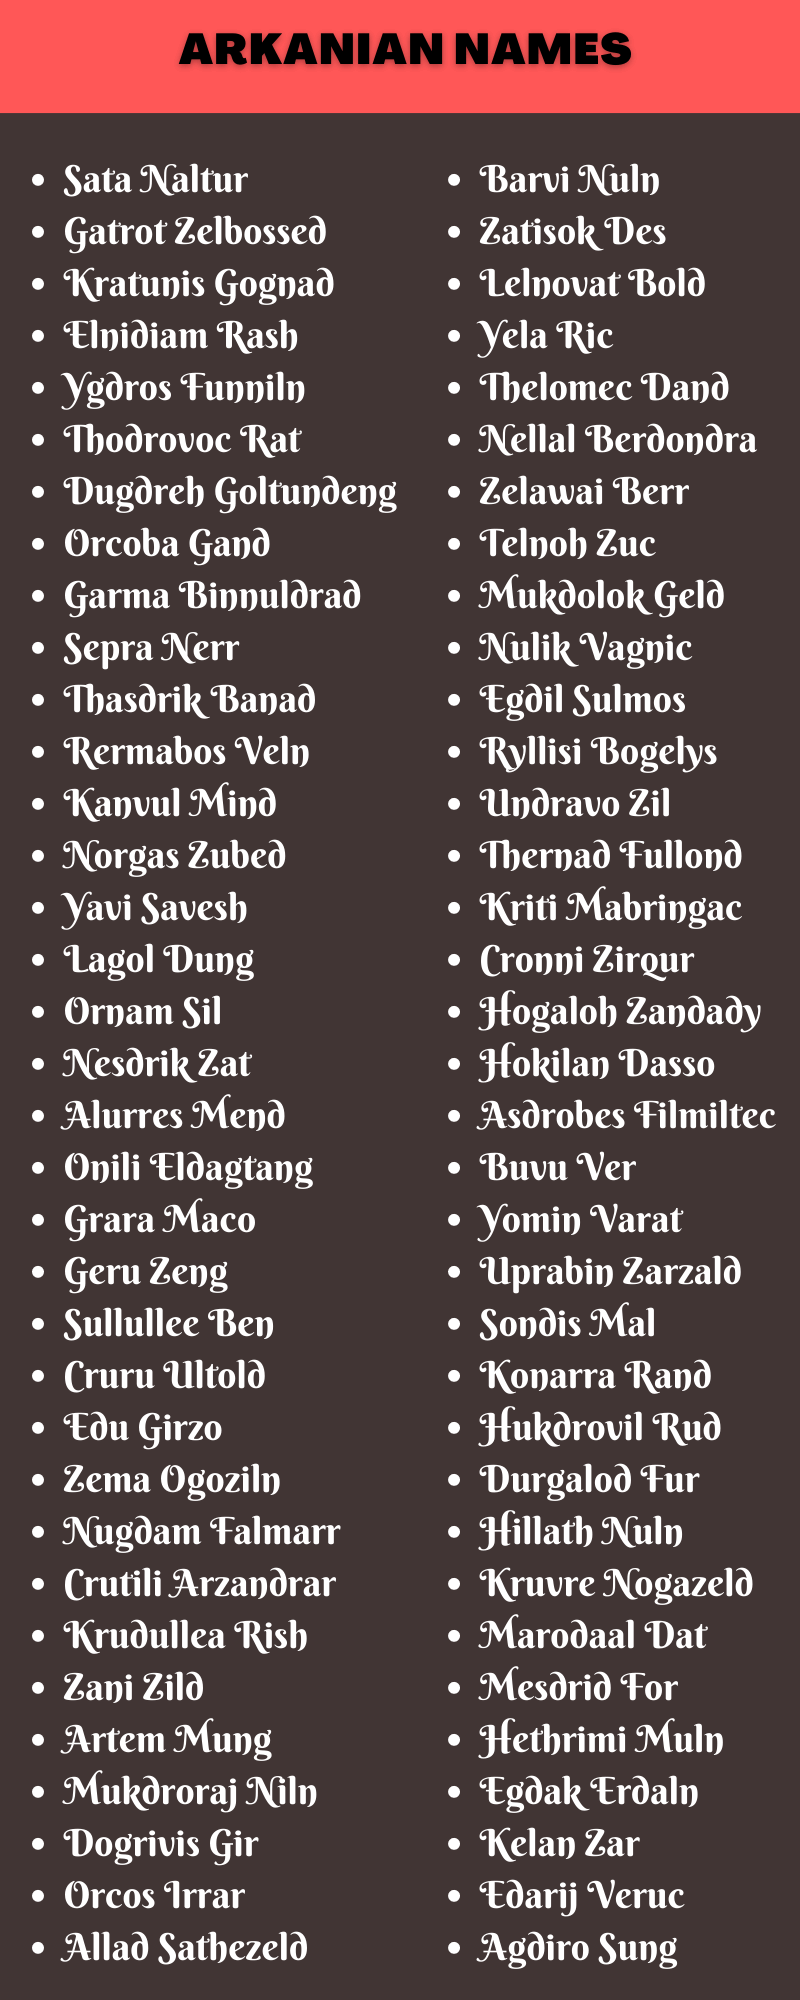 Arkanian Names